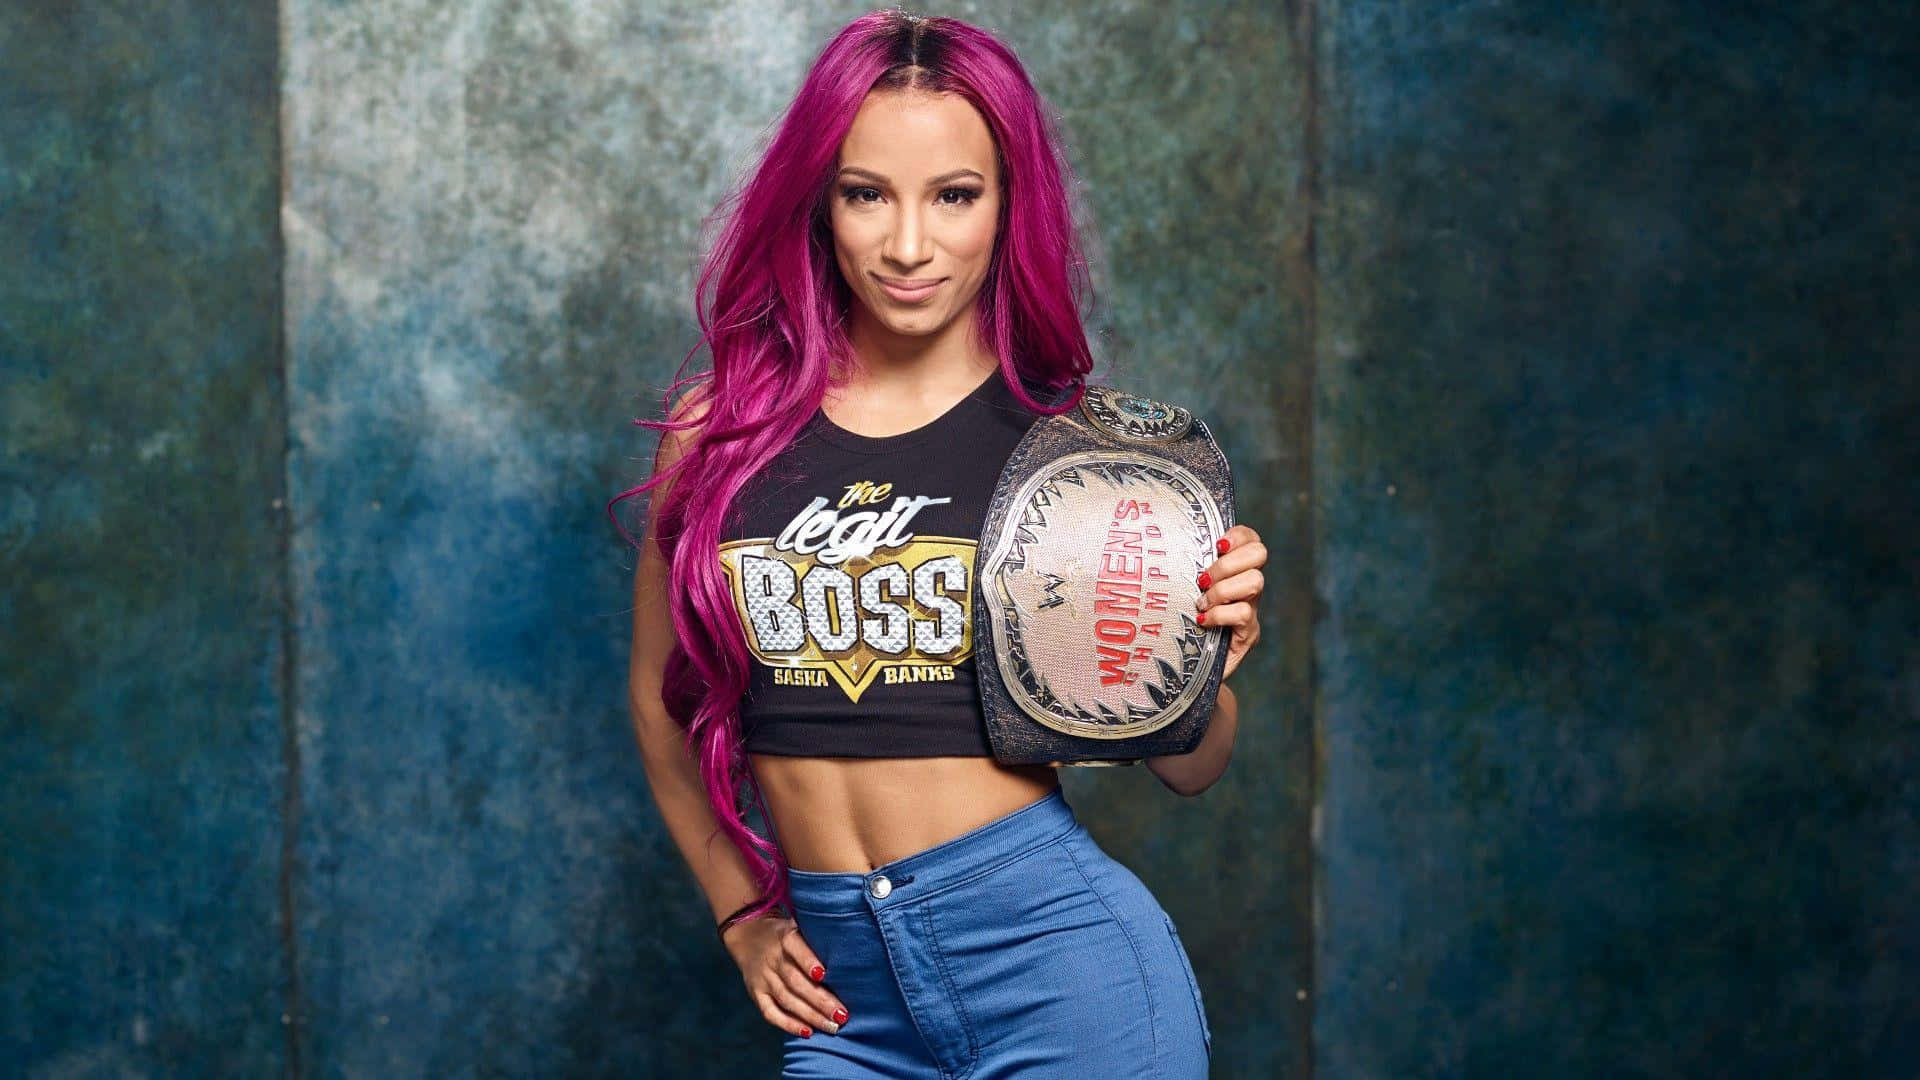 WWE Superstar Sasha Banks Wallpaper